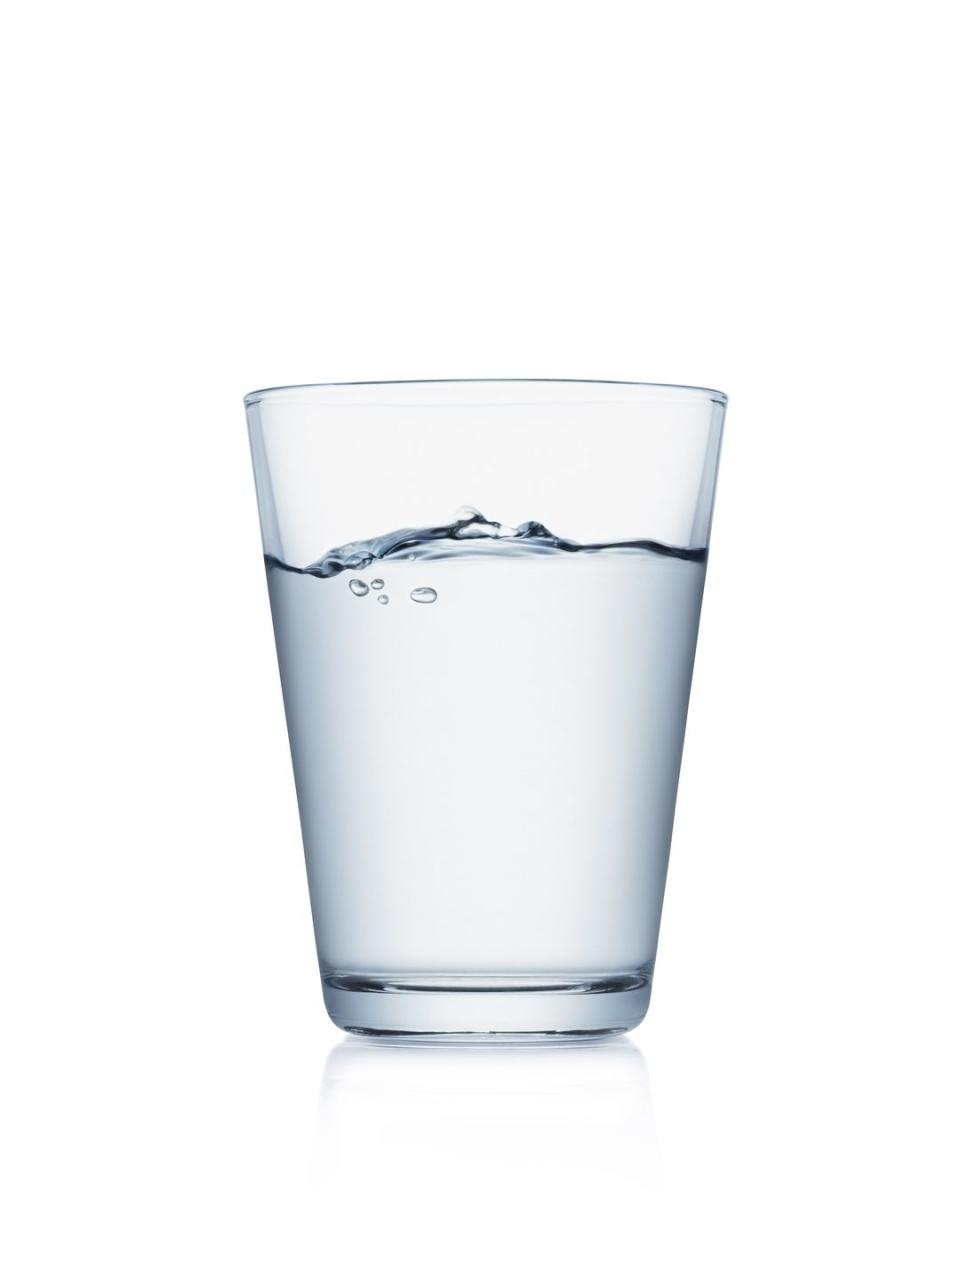 25) It's better to drink alkaline water than regular water